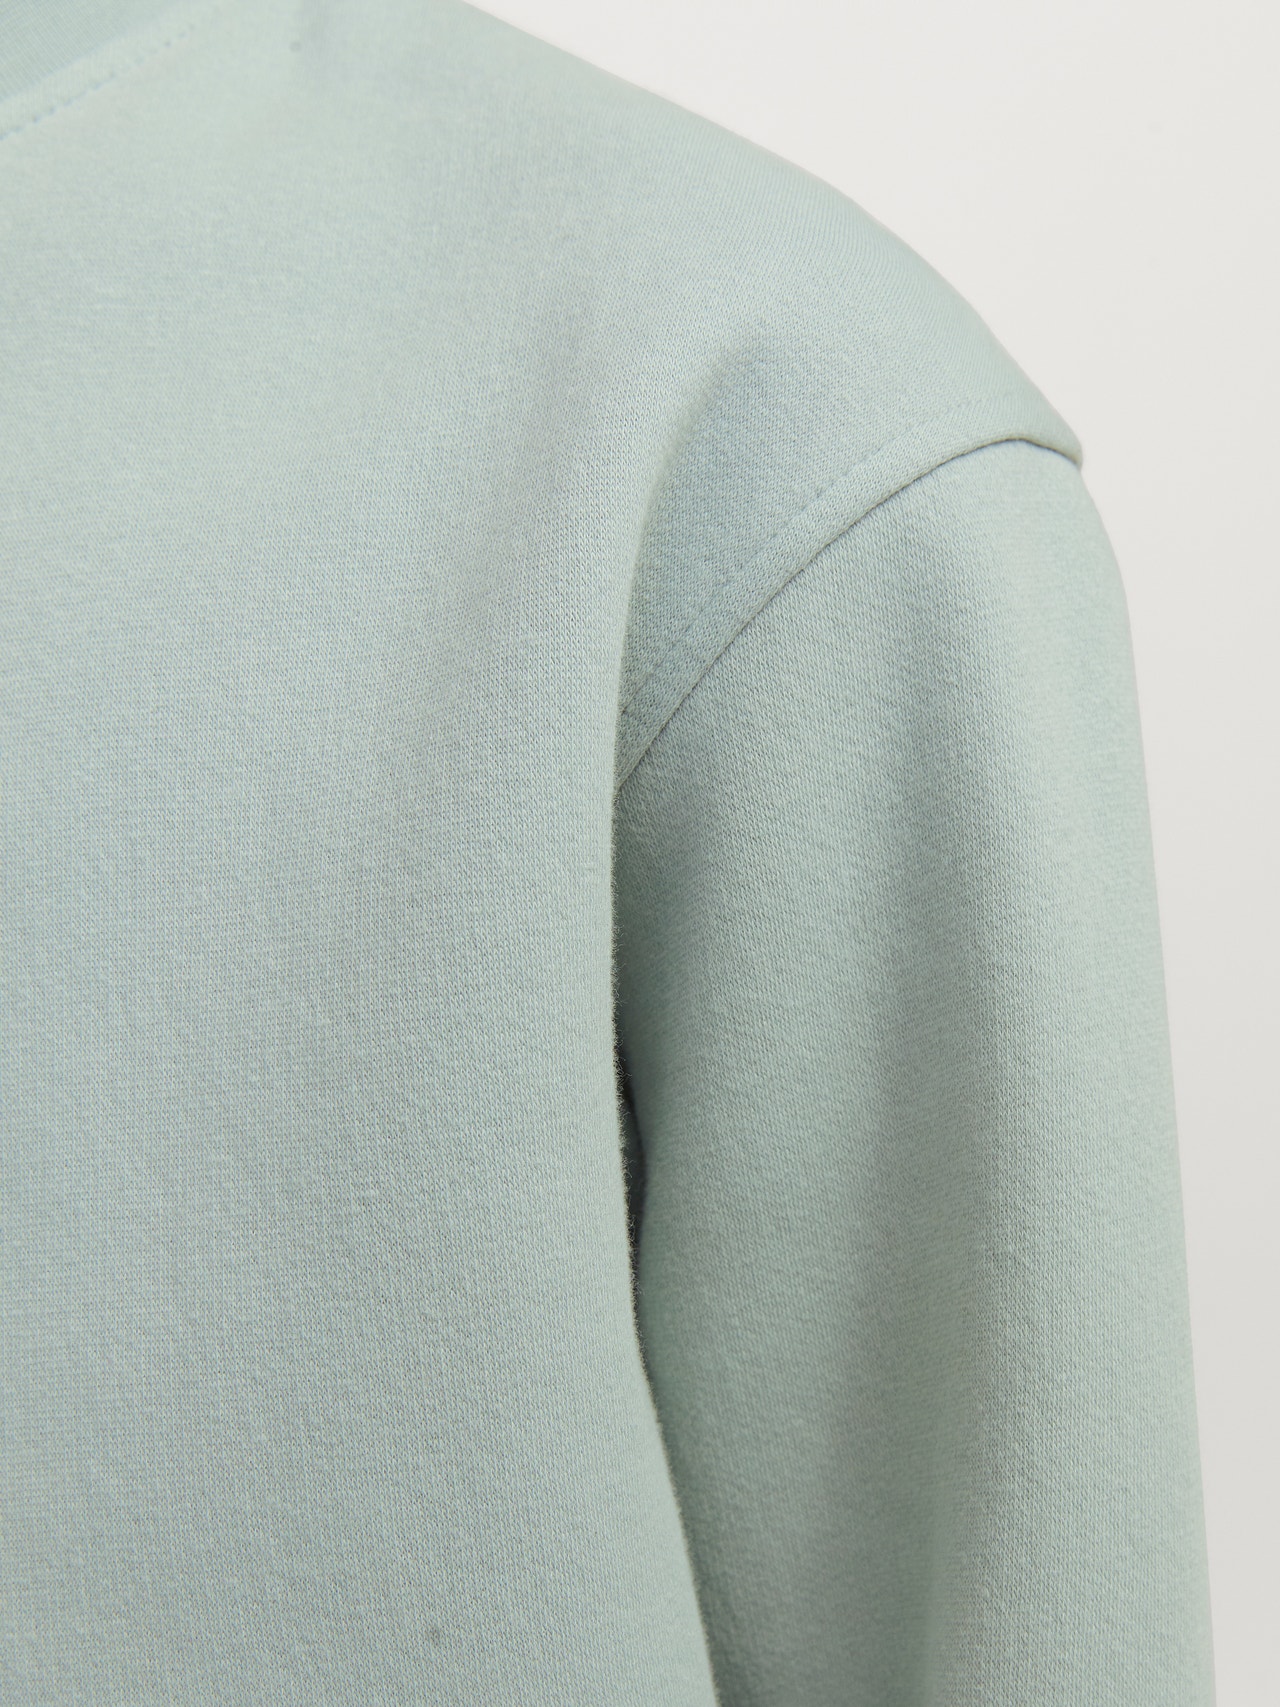 Jack & Jones Printed Crew neck Sweatshirt Mini -Gray Mist - 12257442